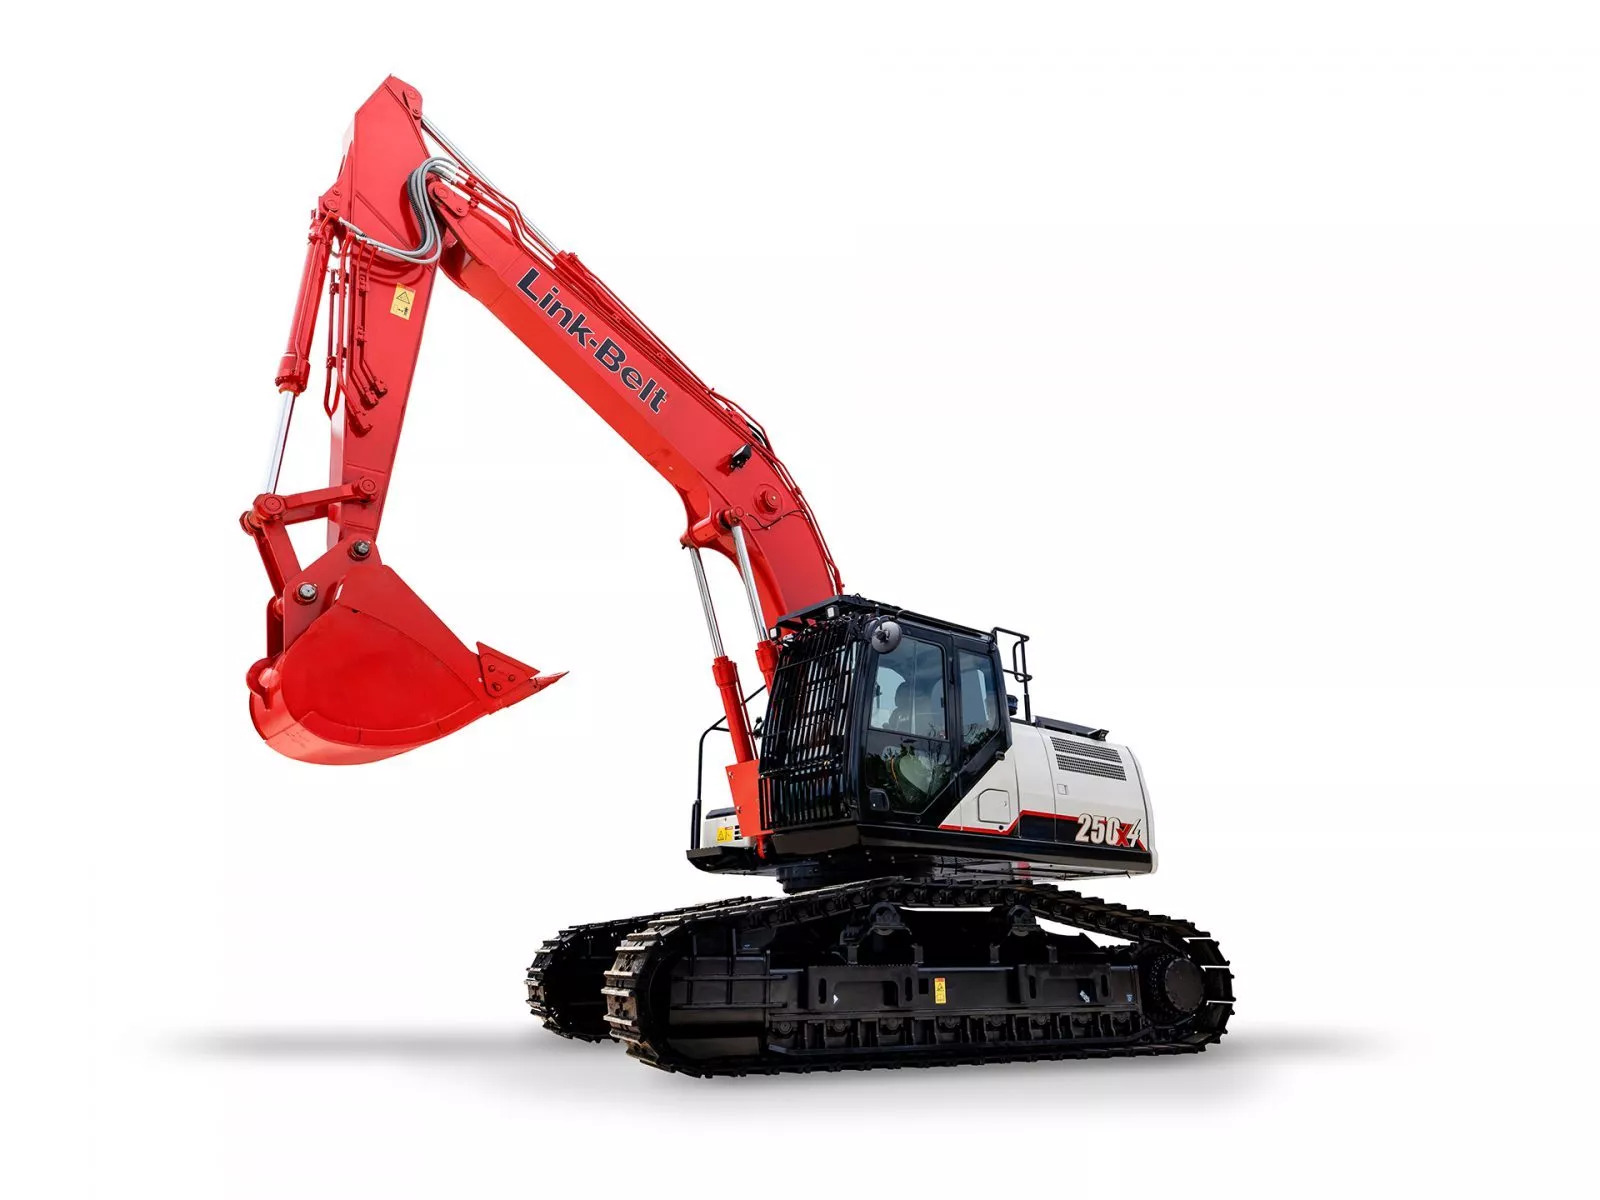 Link-Belt excavator 250X4 Heavy duty | Product Link-Belt excavator 250X4 Heavy duty